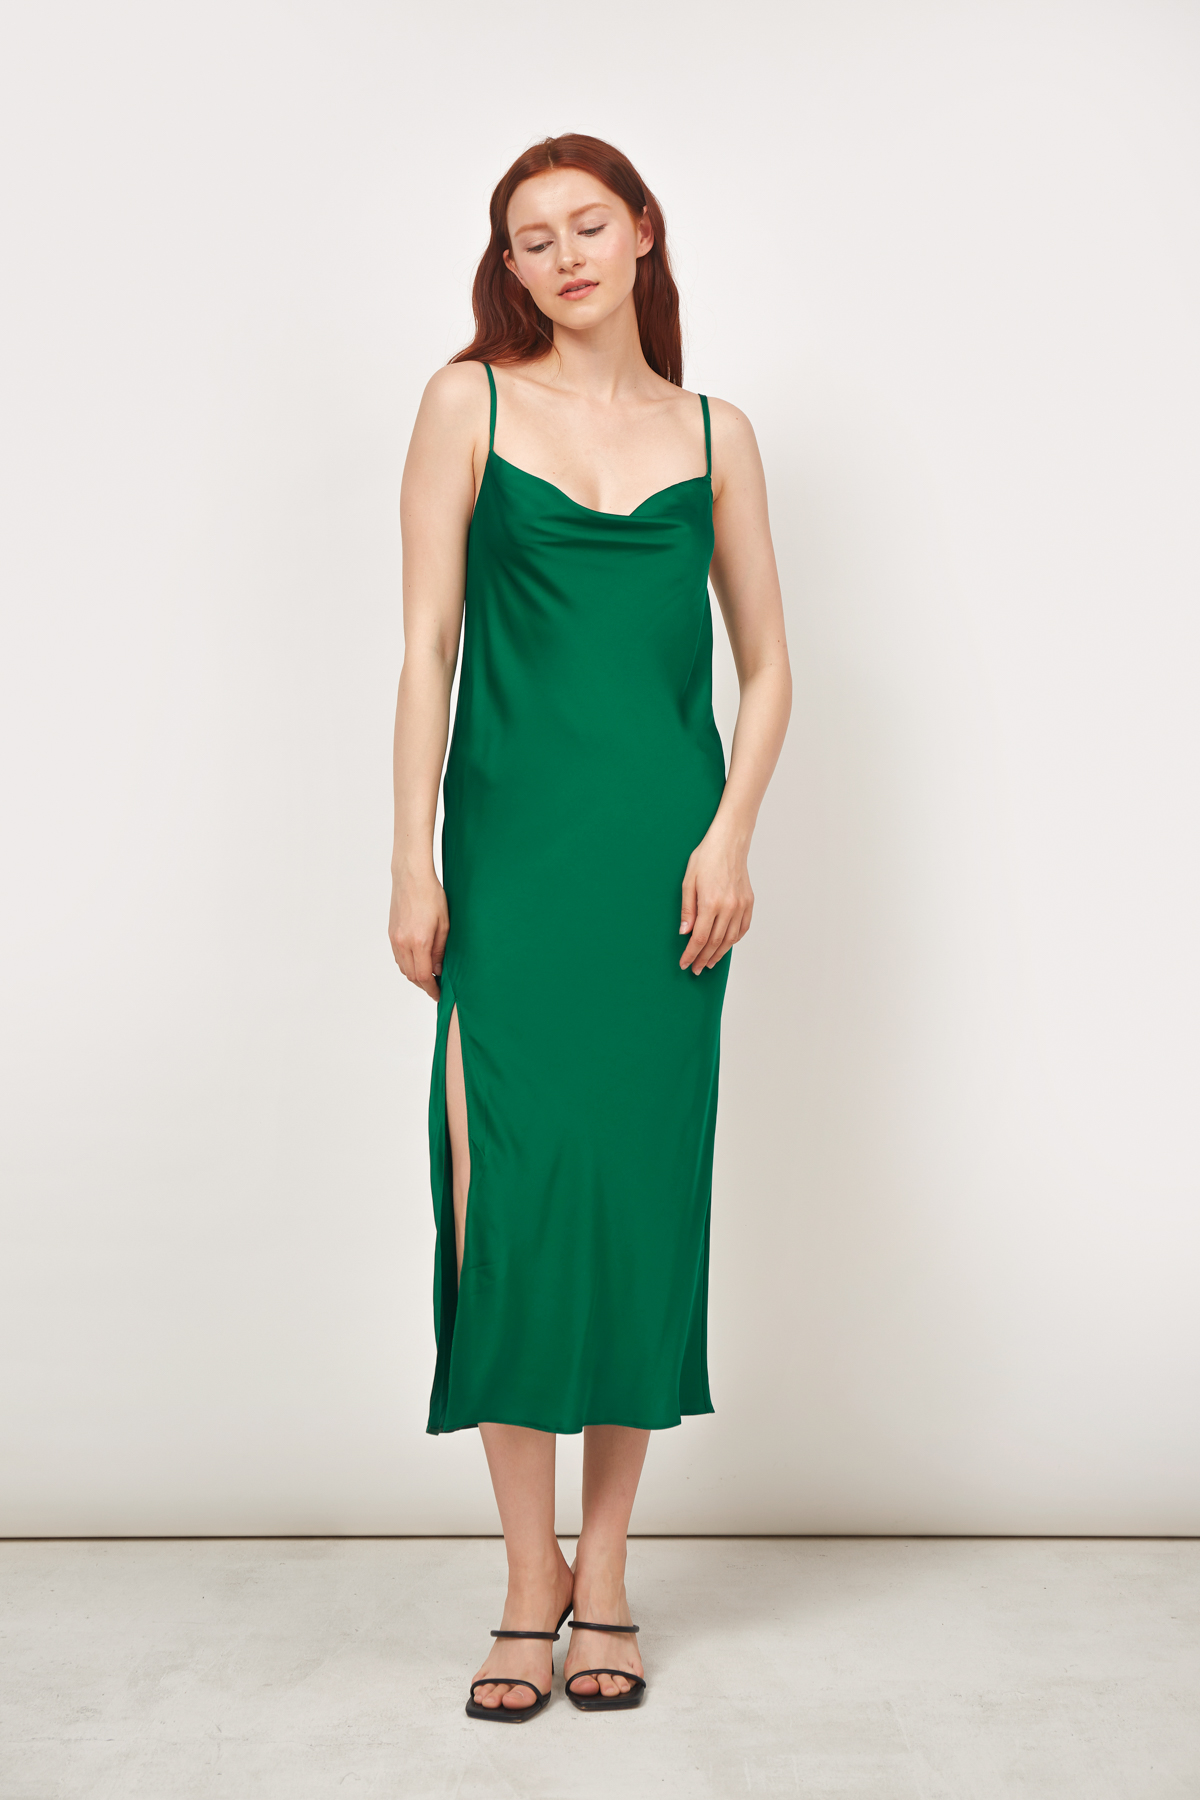 Green satin dress, photo 1